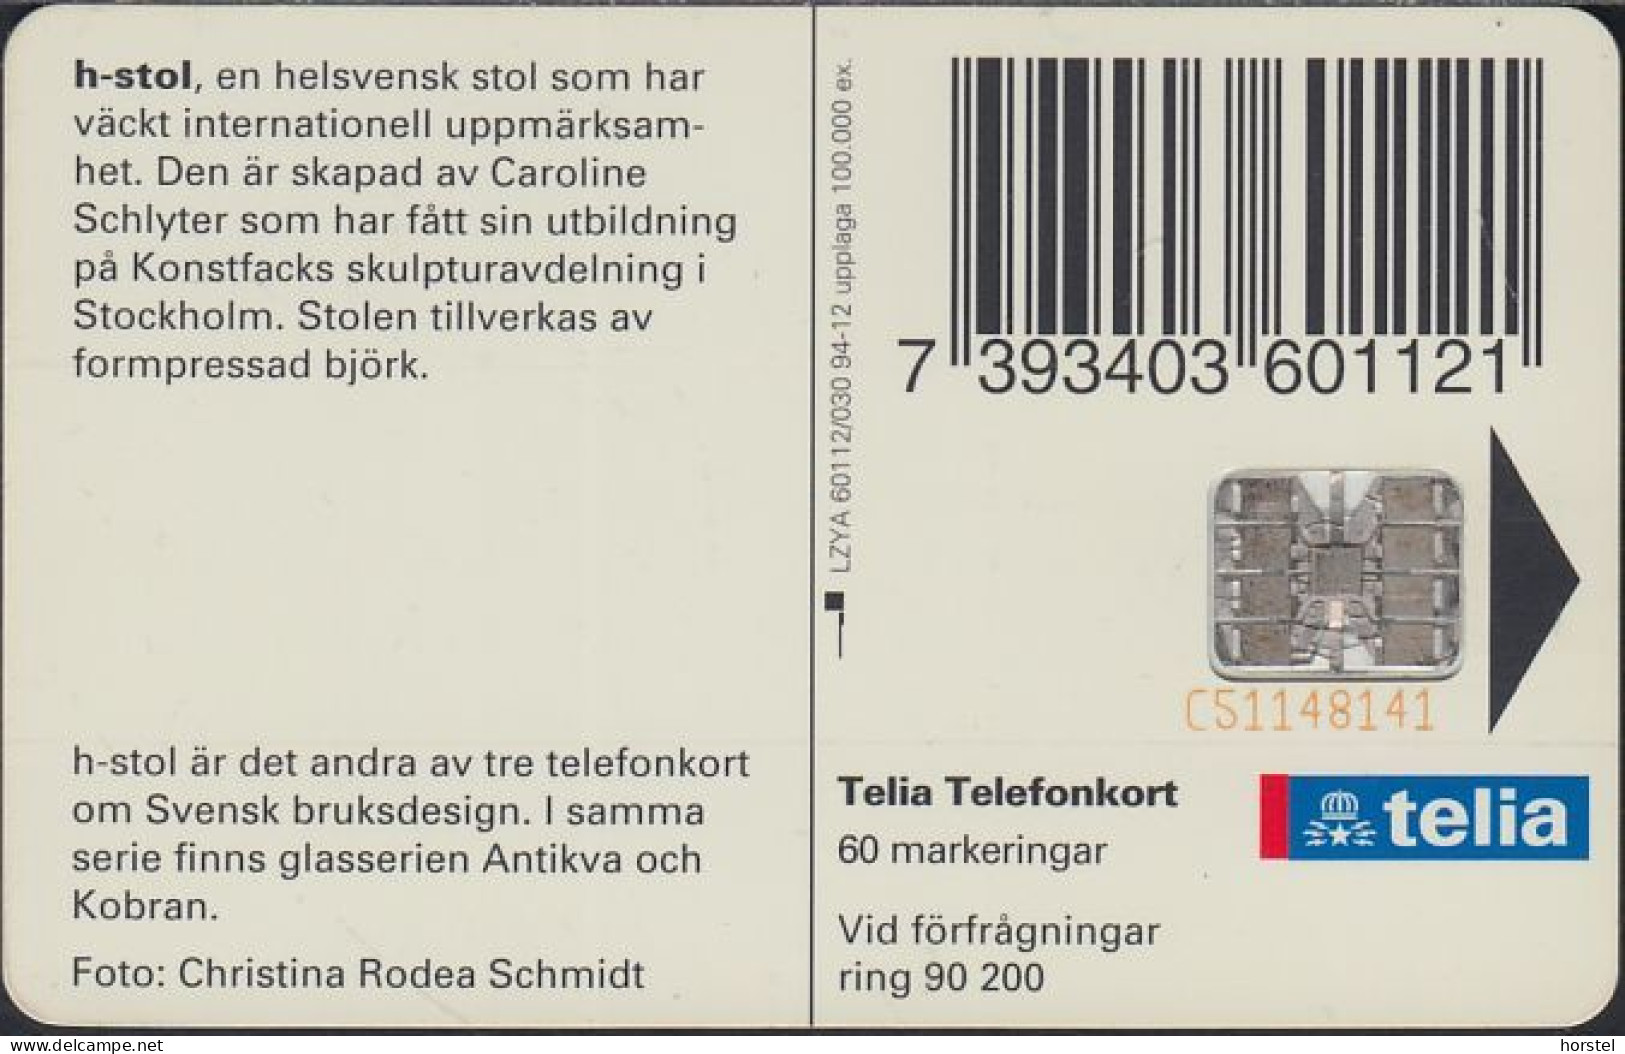 Schweden Chip 093  Design - H-shaped Chair - Stuhl  (60112/030) Red BN C51148141 - Sweden